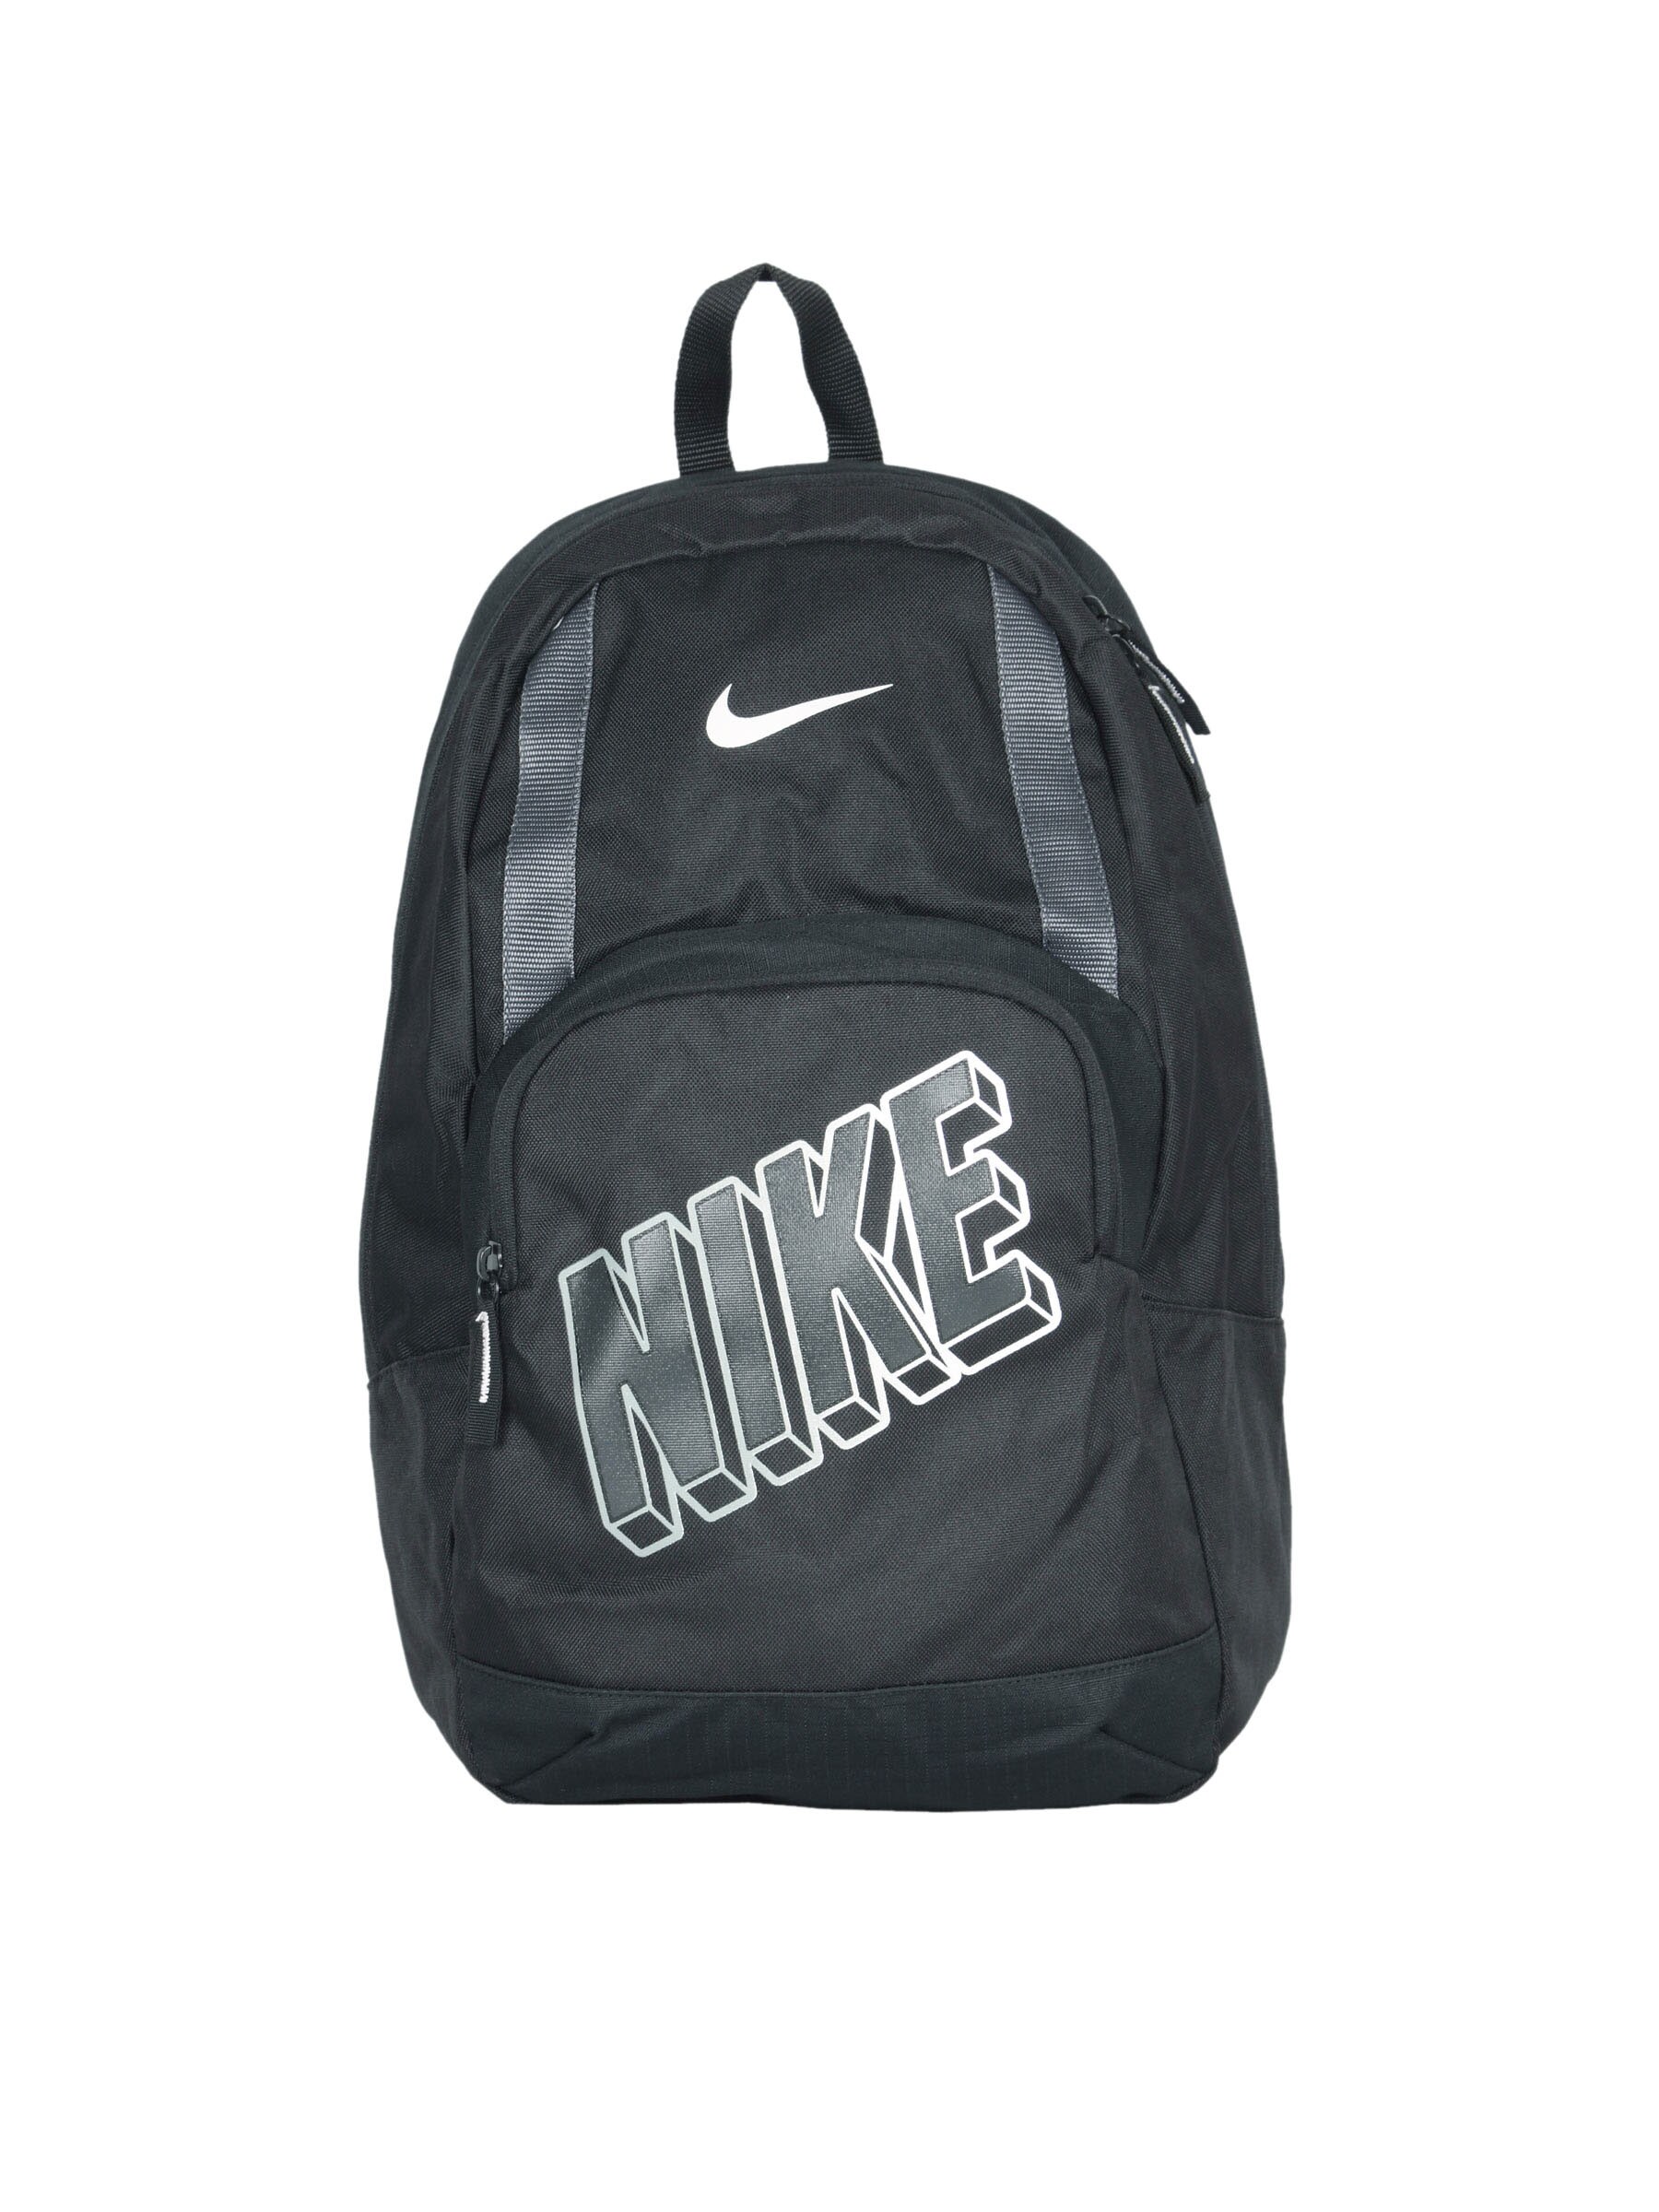 Nike Unisex Classic Black Grey Backpack